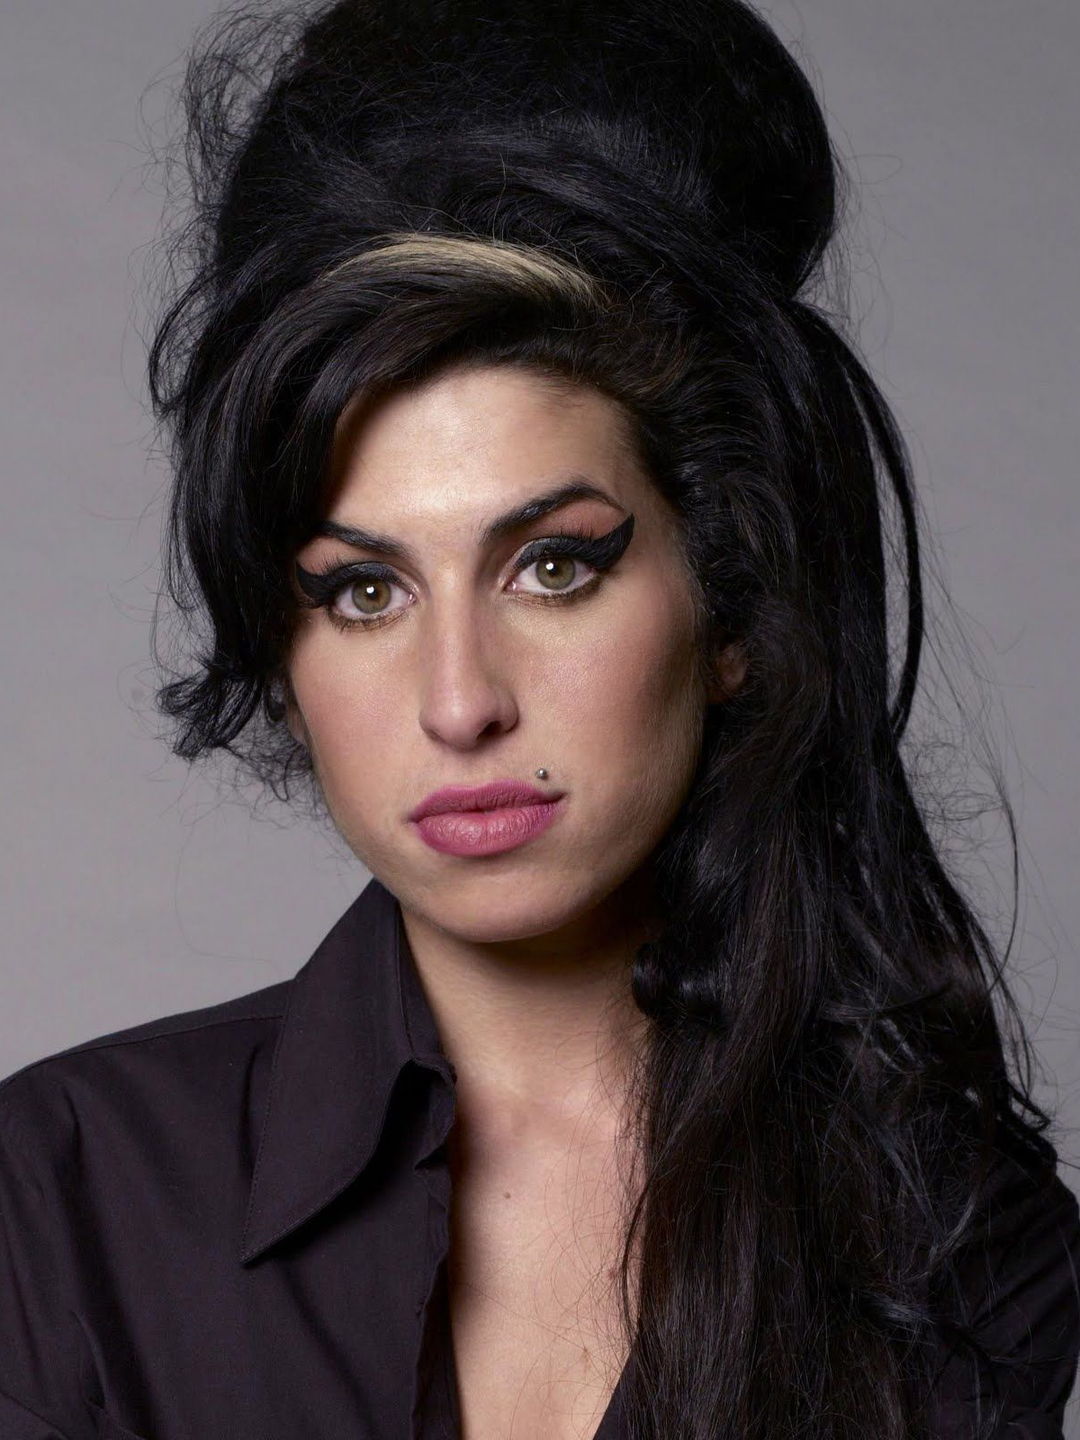 Amy Winehouse ethnicity